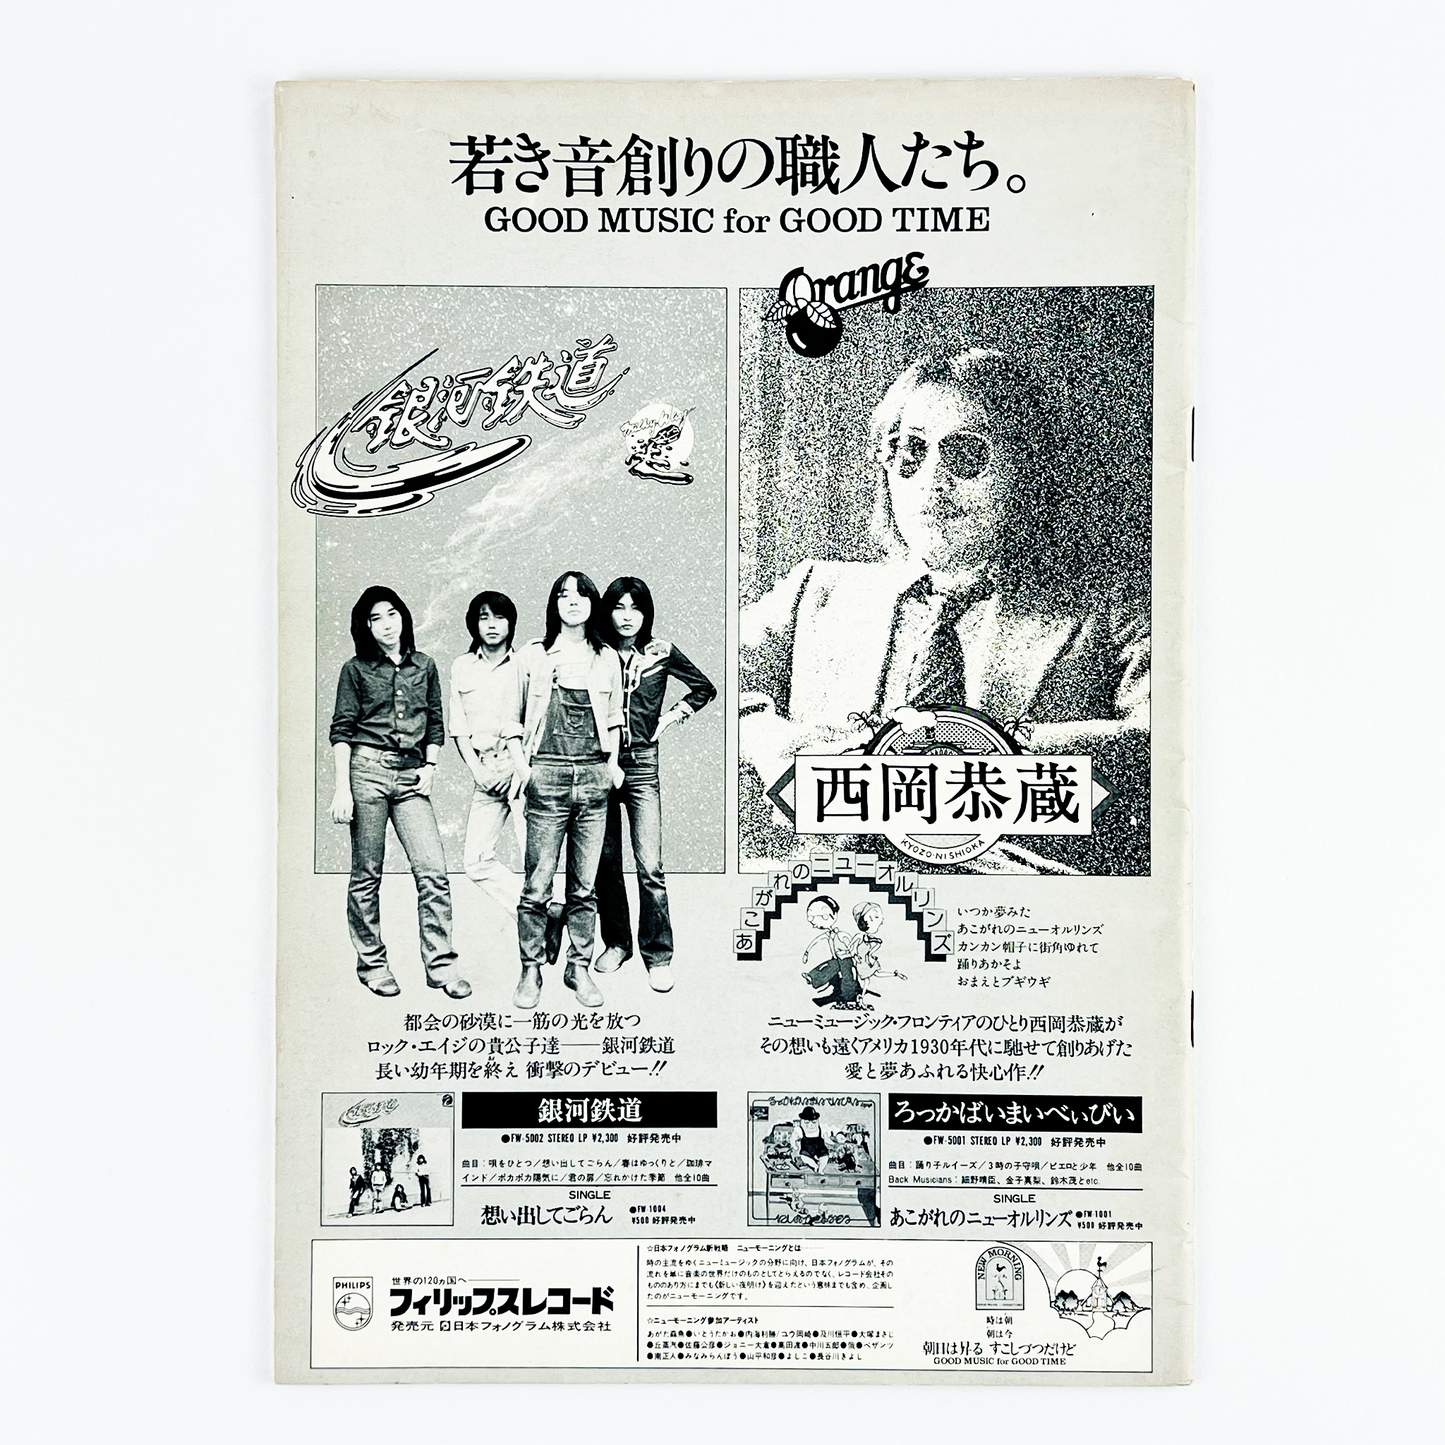 ZOO NO.2 1975 SEPTEMBER 9  昭和50年9月 | ズー編集部